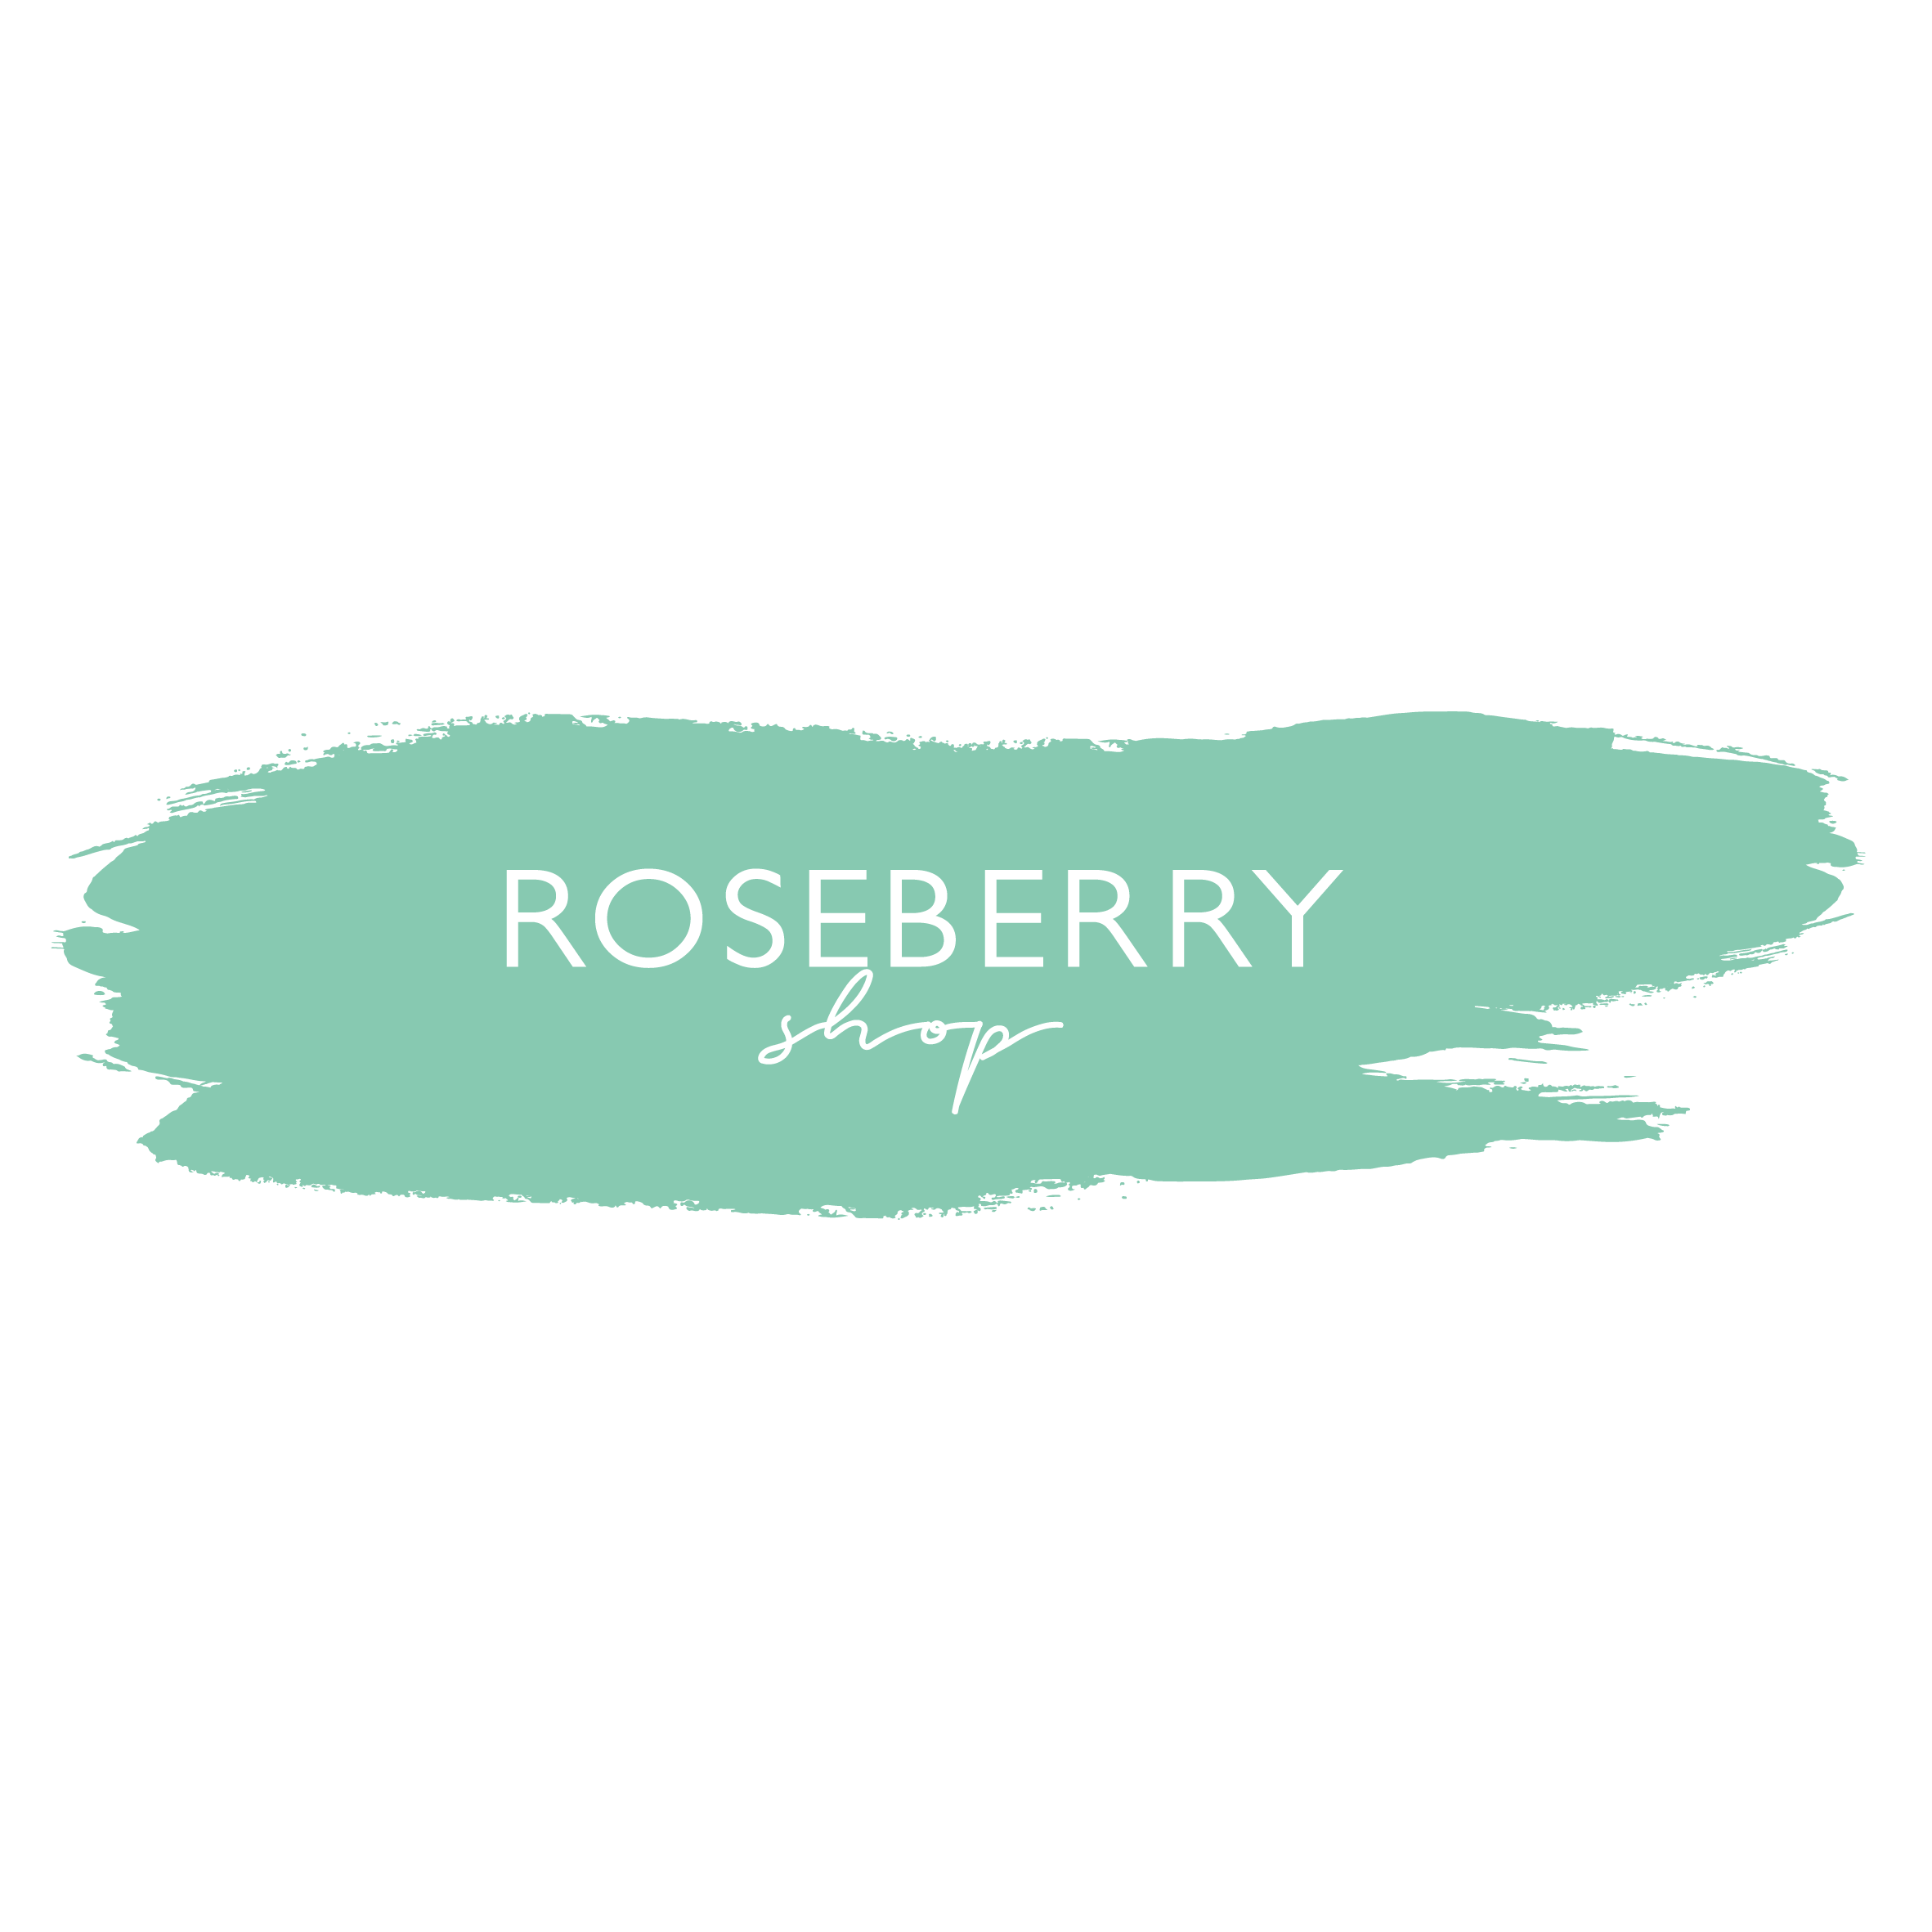 Roseberryshop